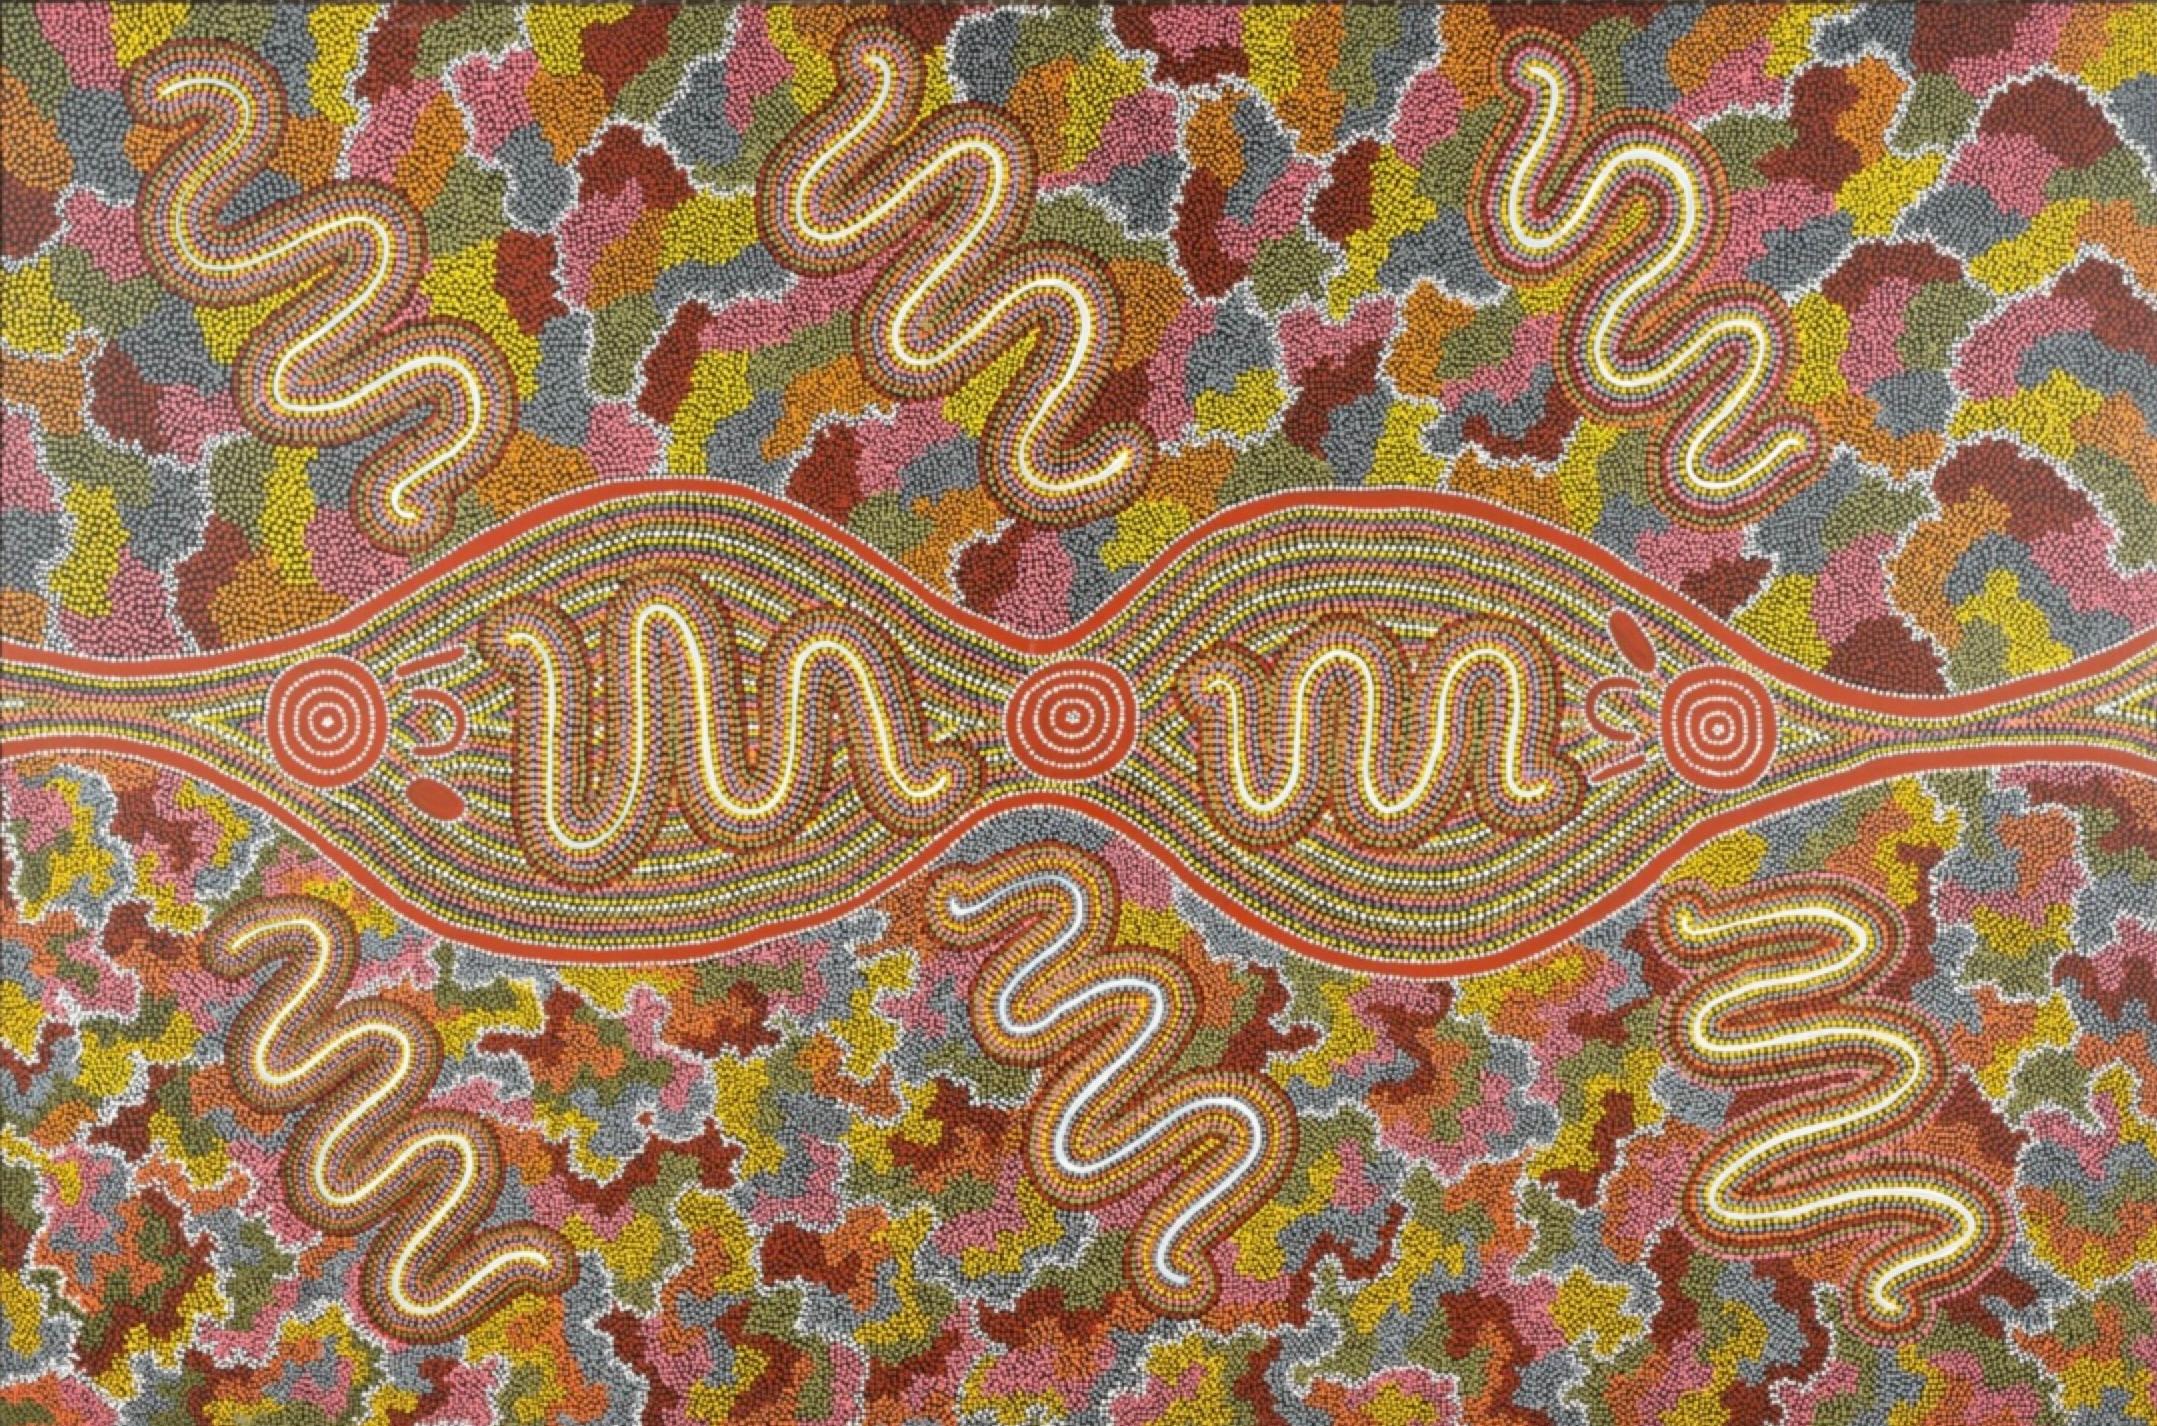 Worm Dreaming at Mt. Wedge - Aboriginal Australian Abstract Pointillist COLORFUL - Painting by Sonda Turner Nampijinpa